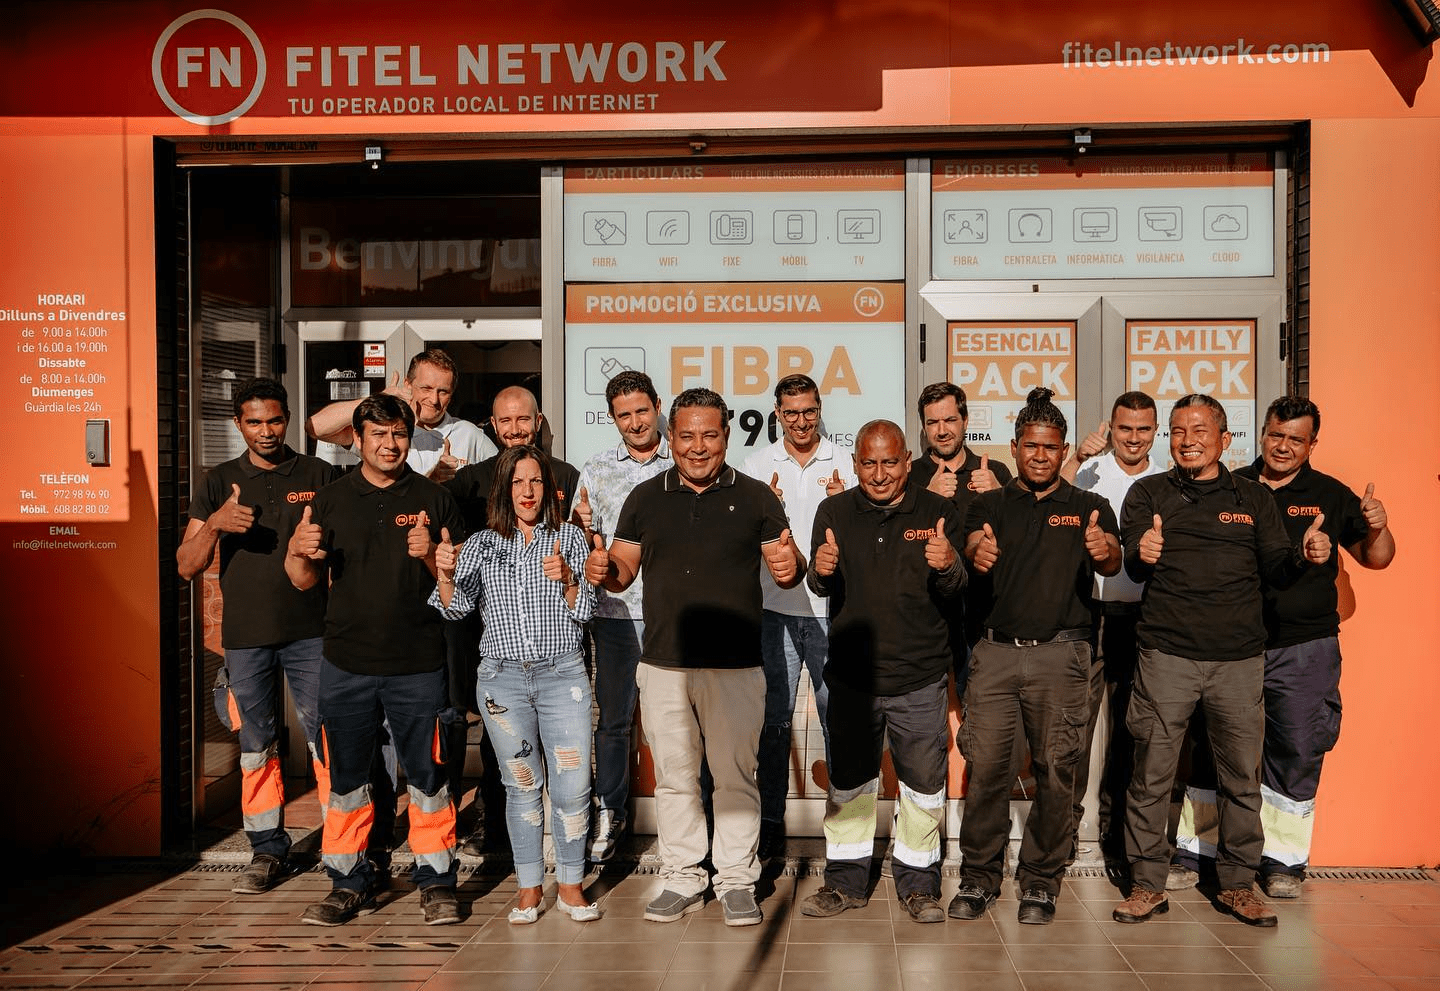 Fitel Network team photo